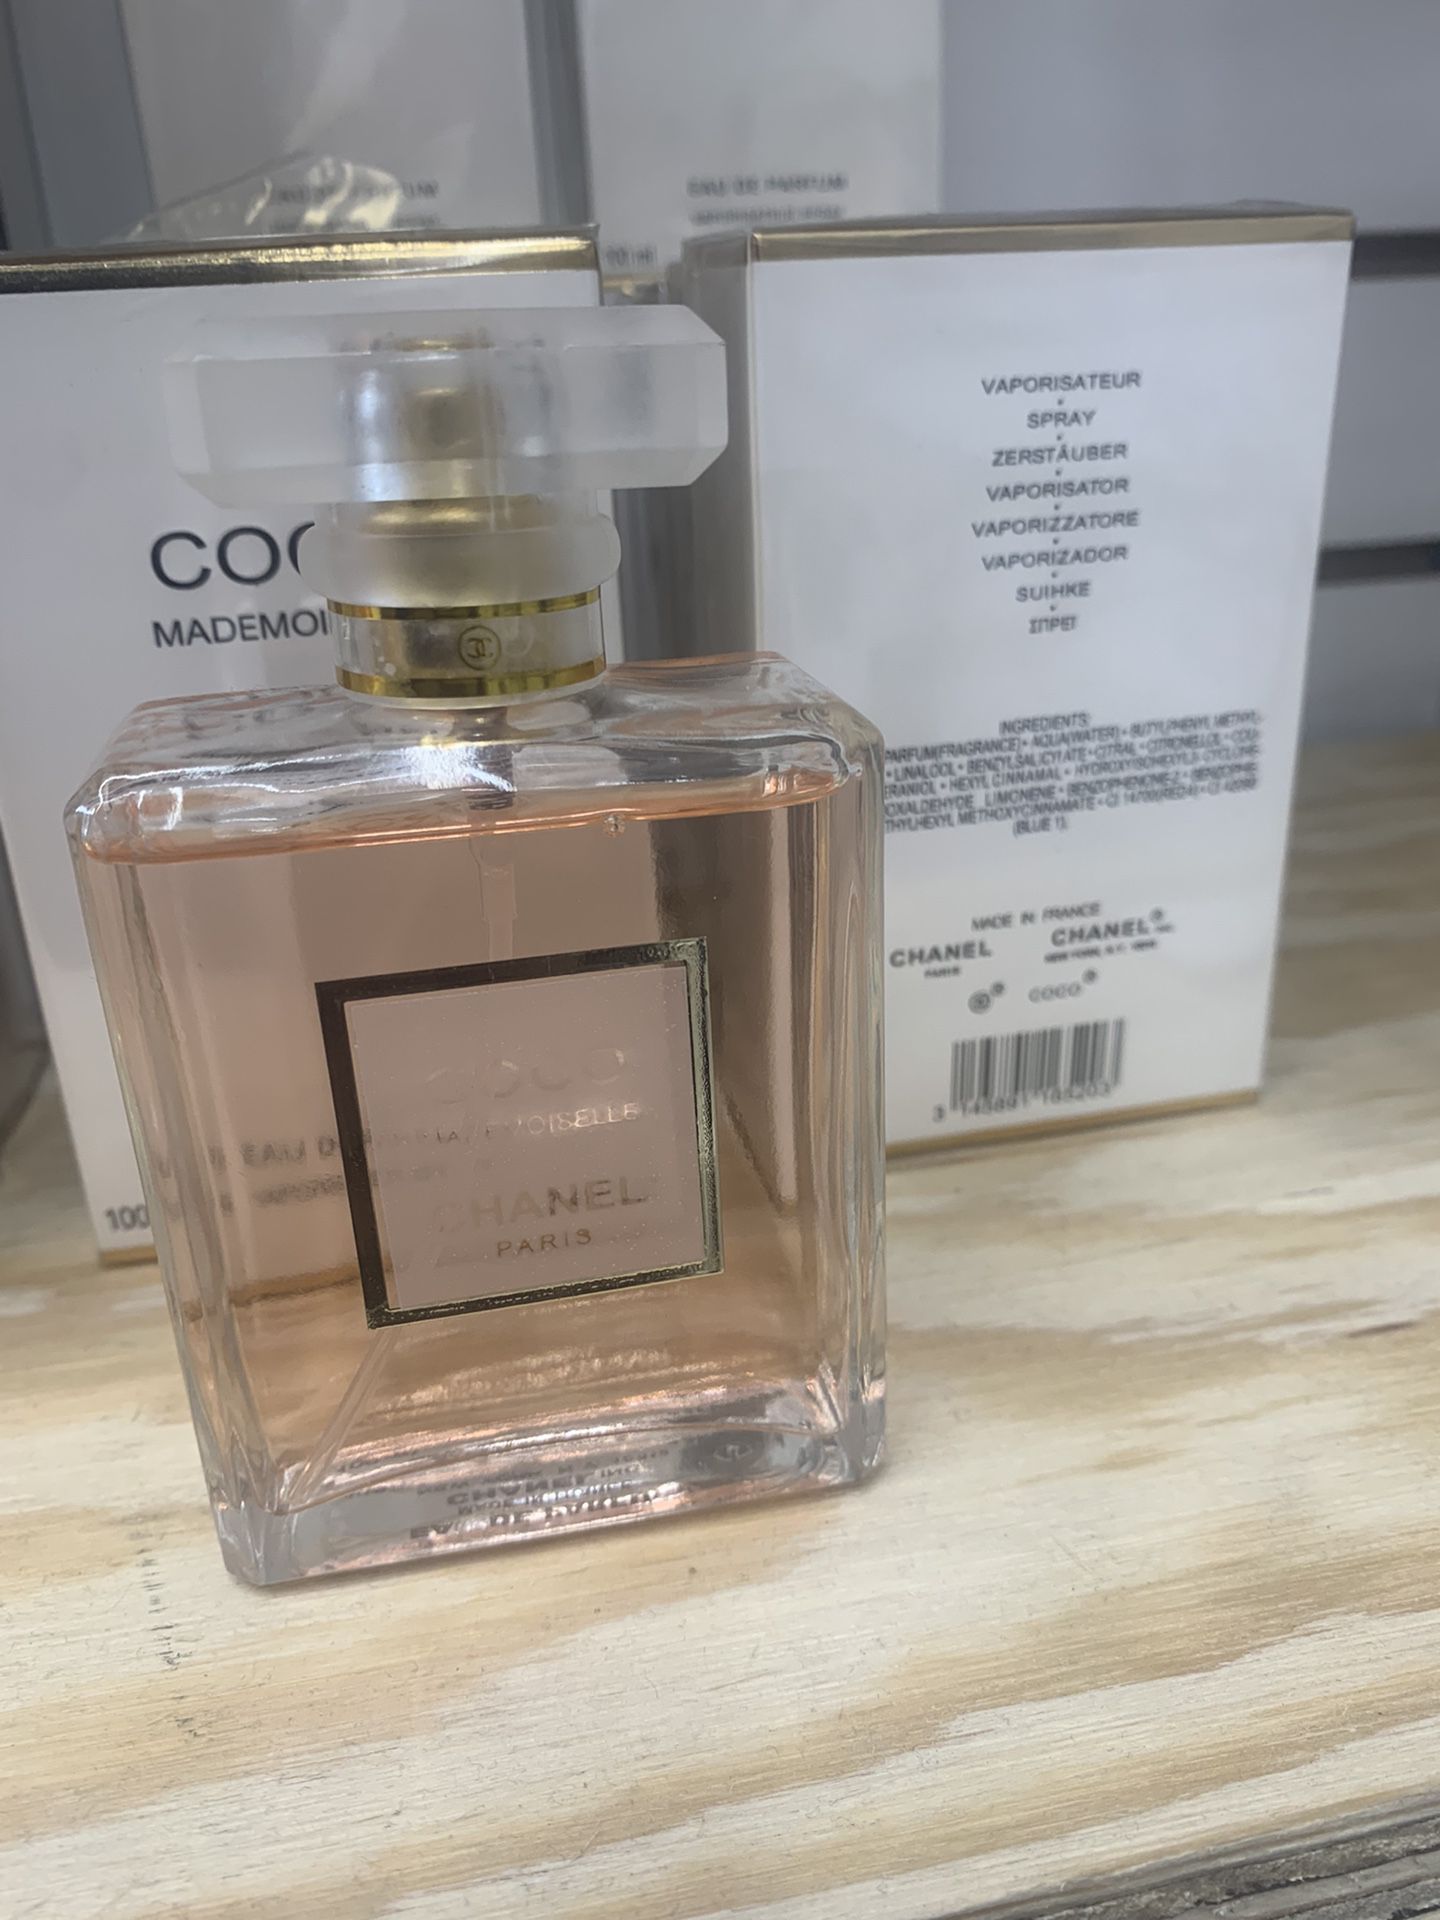 Coco Perfume